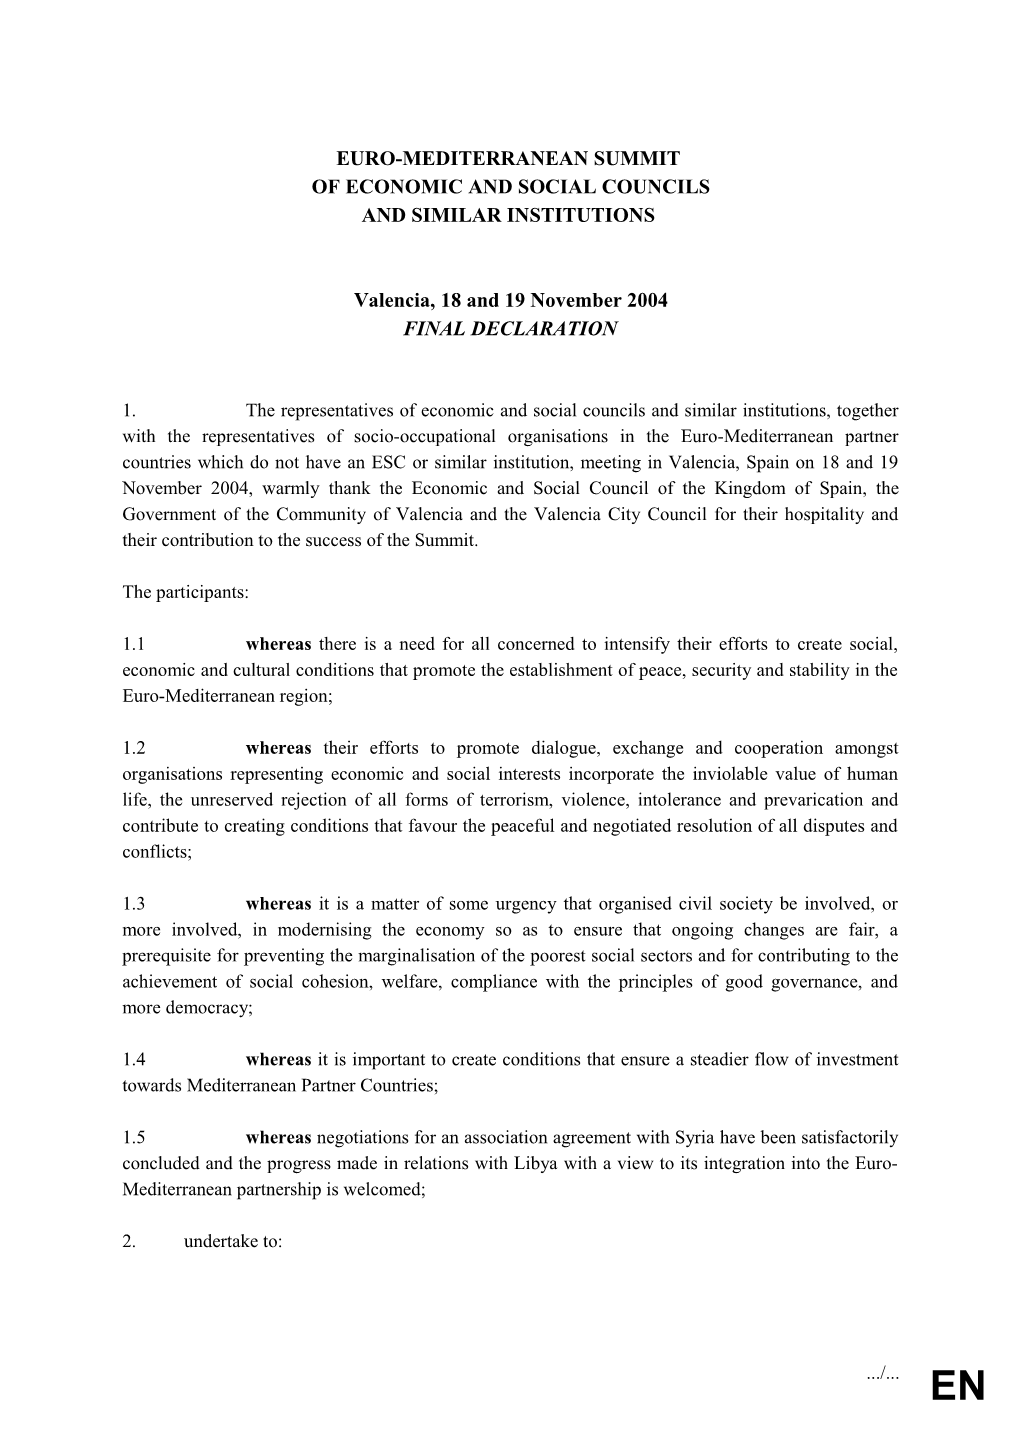 Official Internal Document Di Ces159-2004 Fin Di En